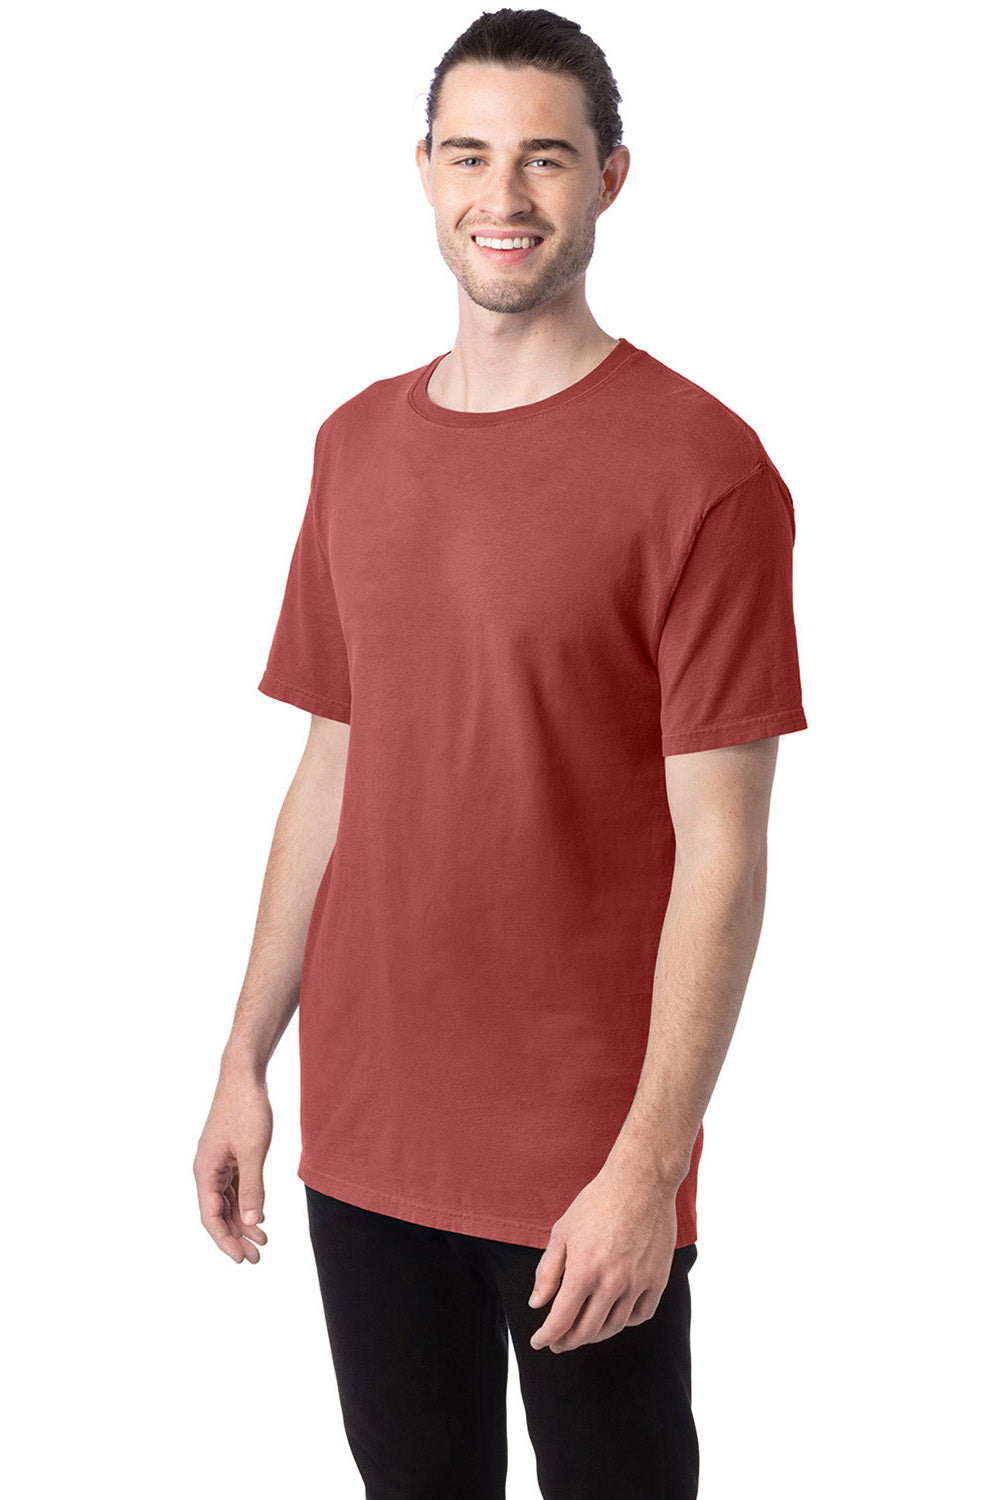 ComfortWash by Hanes GDH100 Mens Short Sleeve Crewneck T-Shirt Nantucket Red 3Q